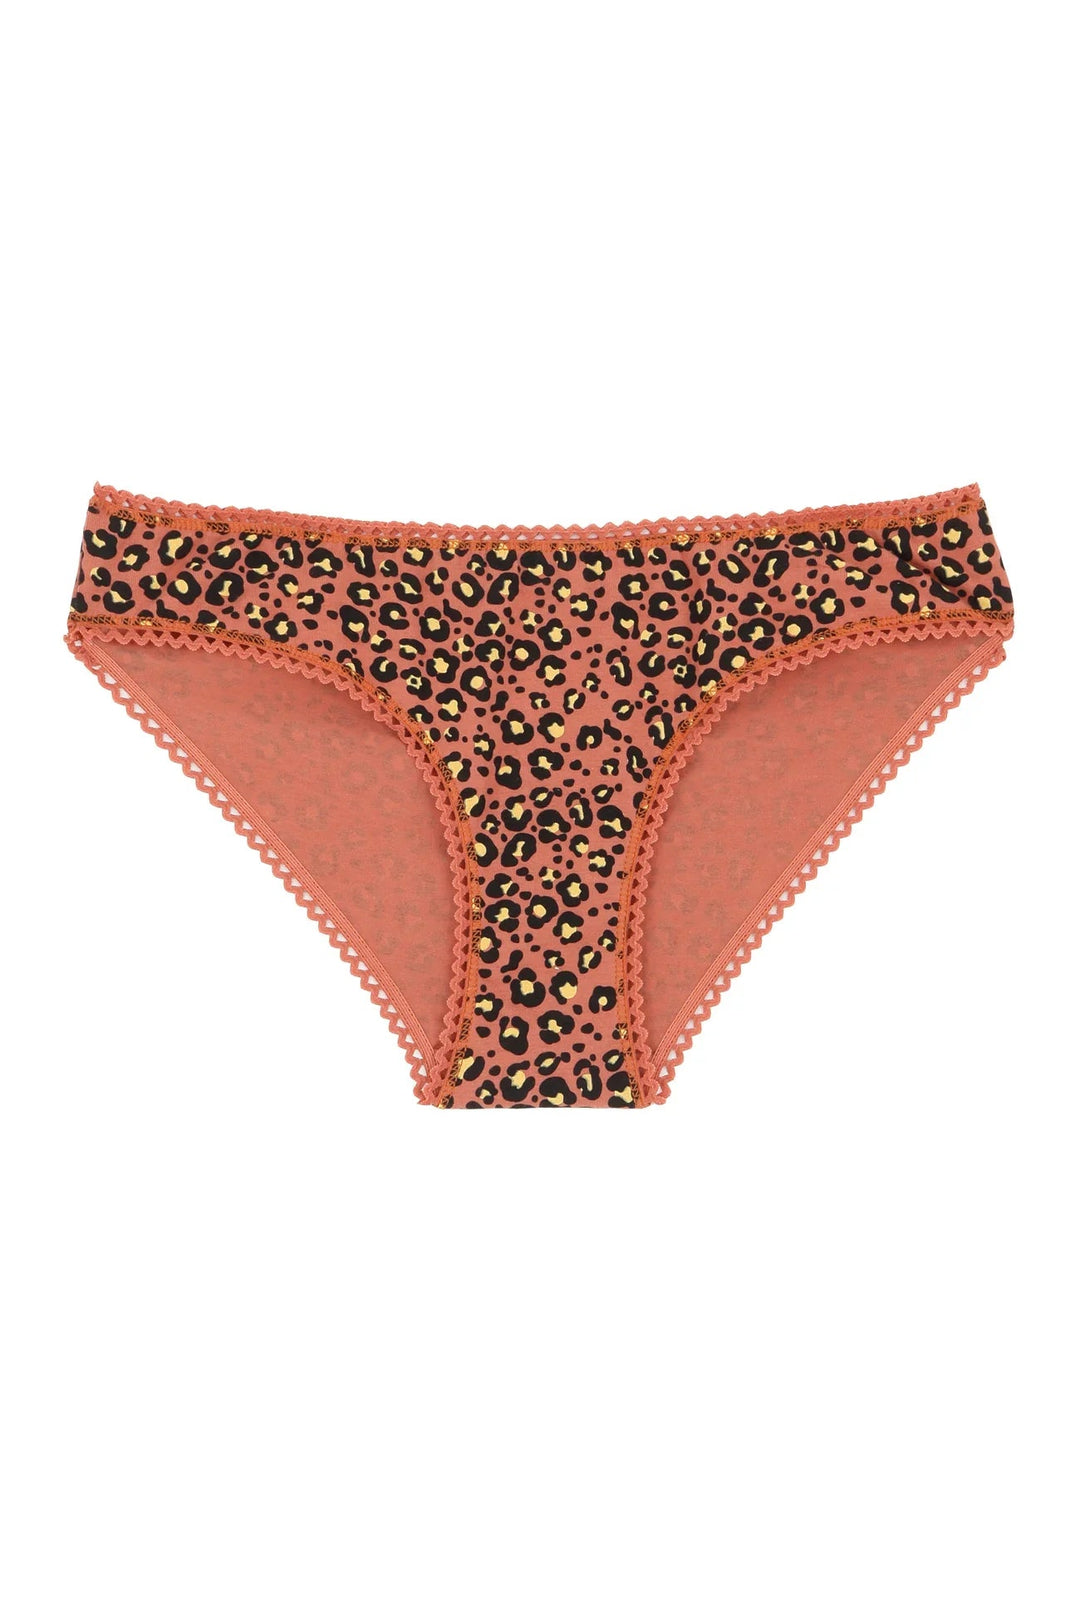 Culotte coton biologique - Leopard rose - rose - fairytale